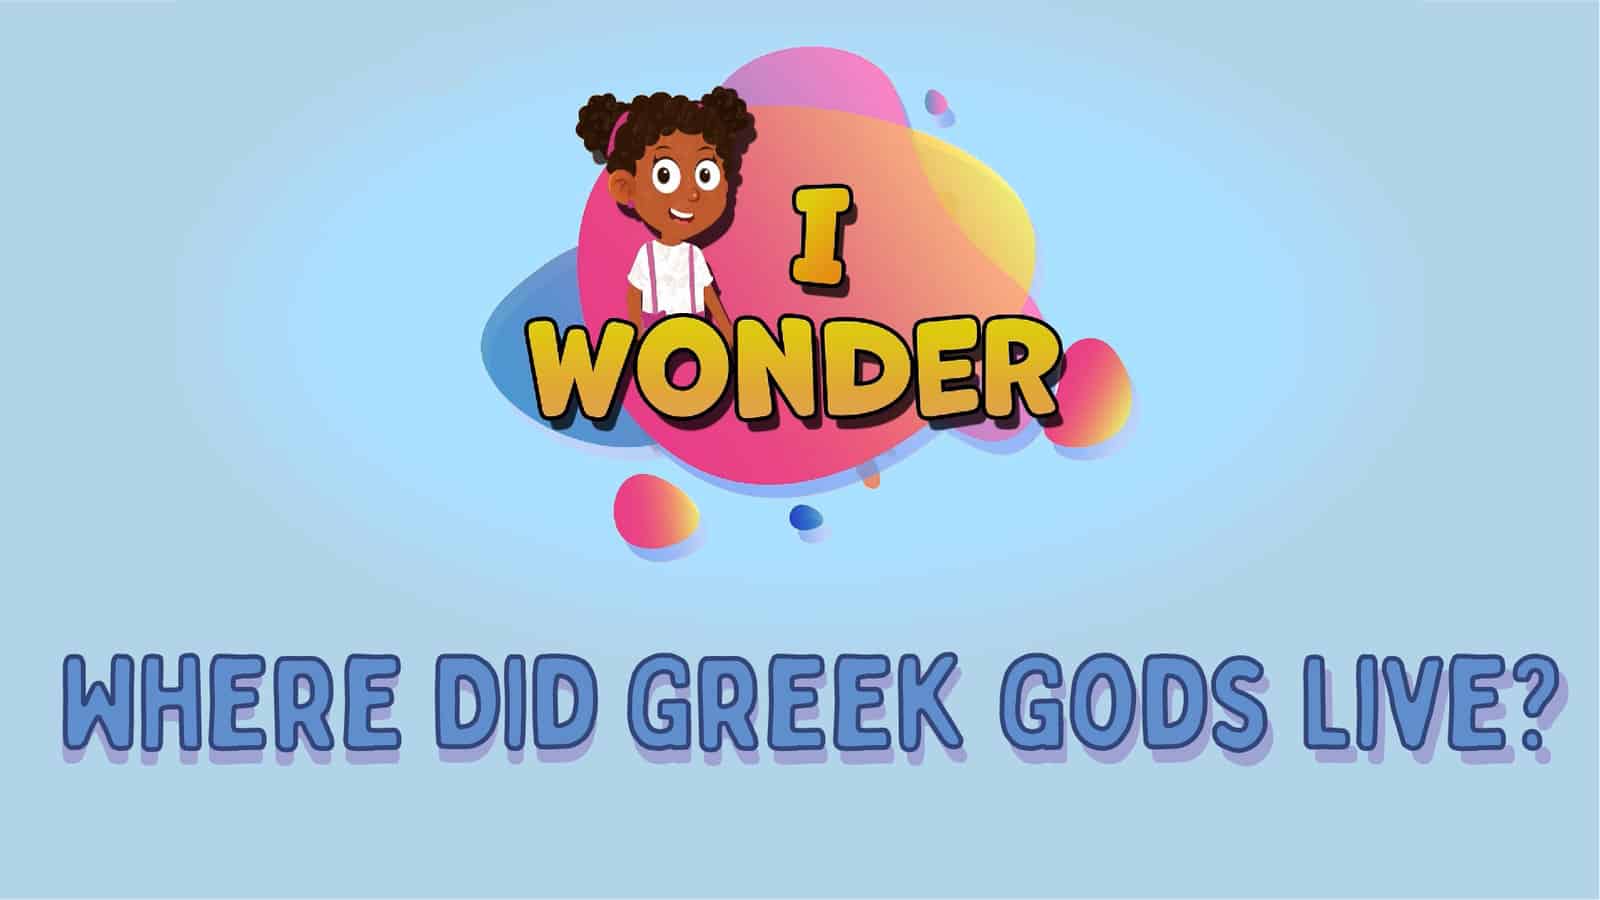 Where Did Greek Gods Live?